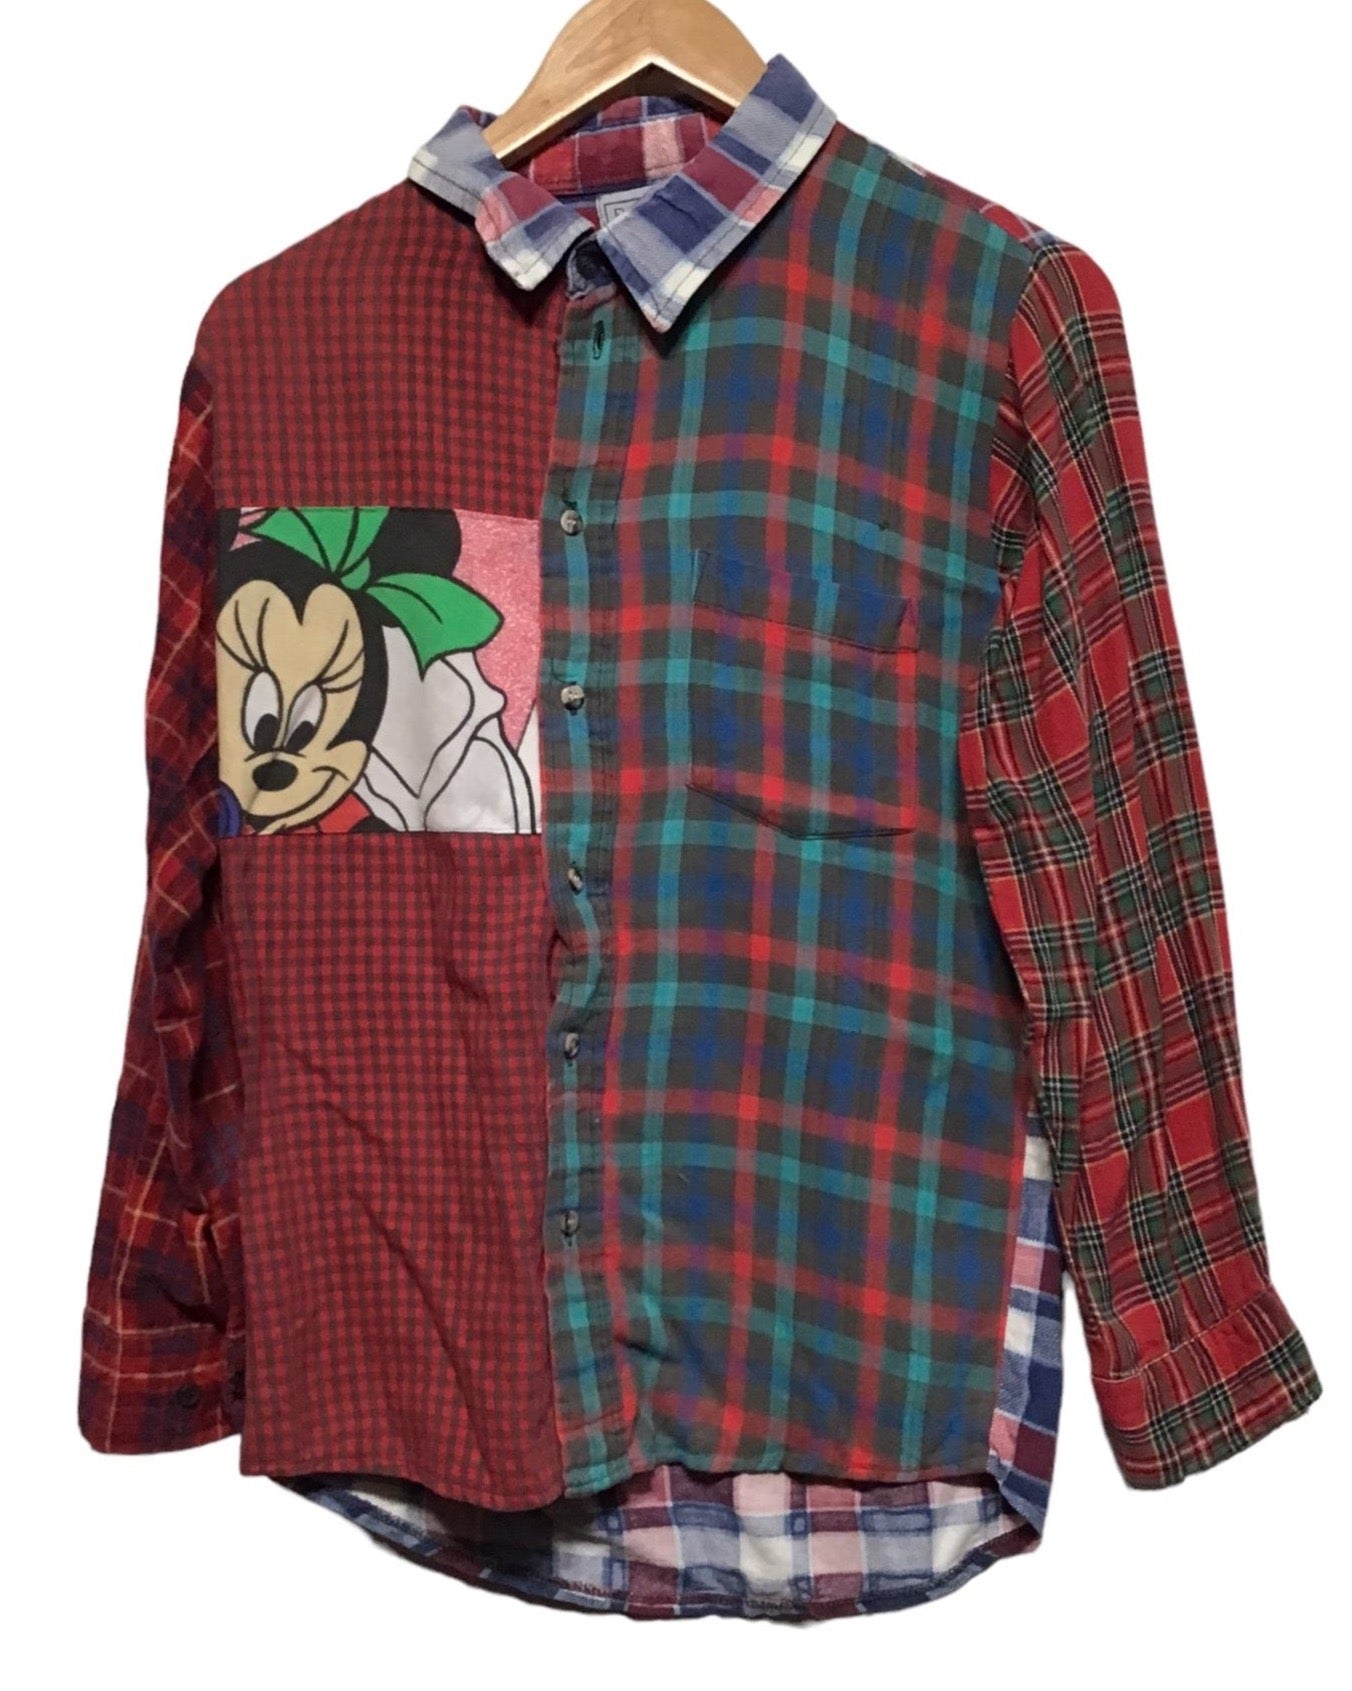 Minney Mouse Multi Patterned Check Shirt (Unisex Size S)